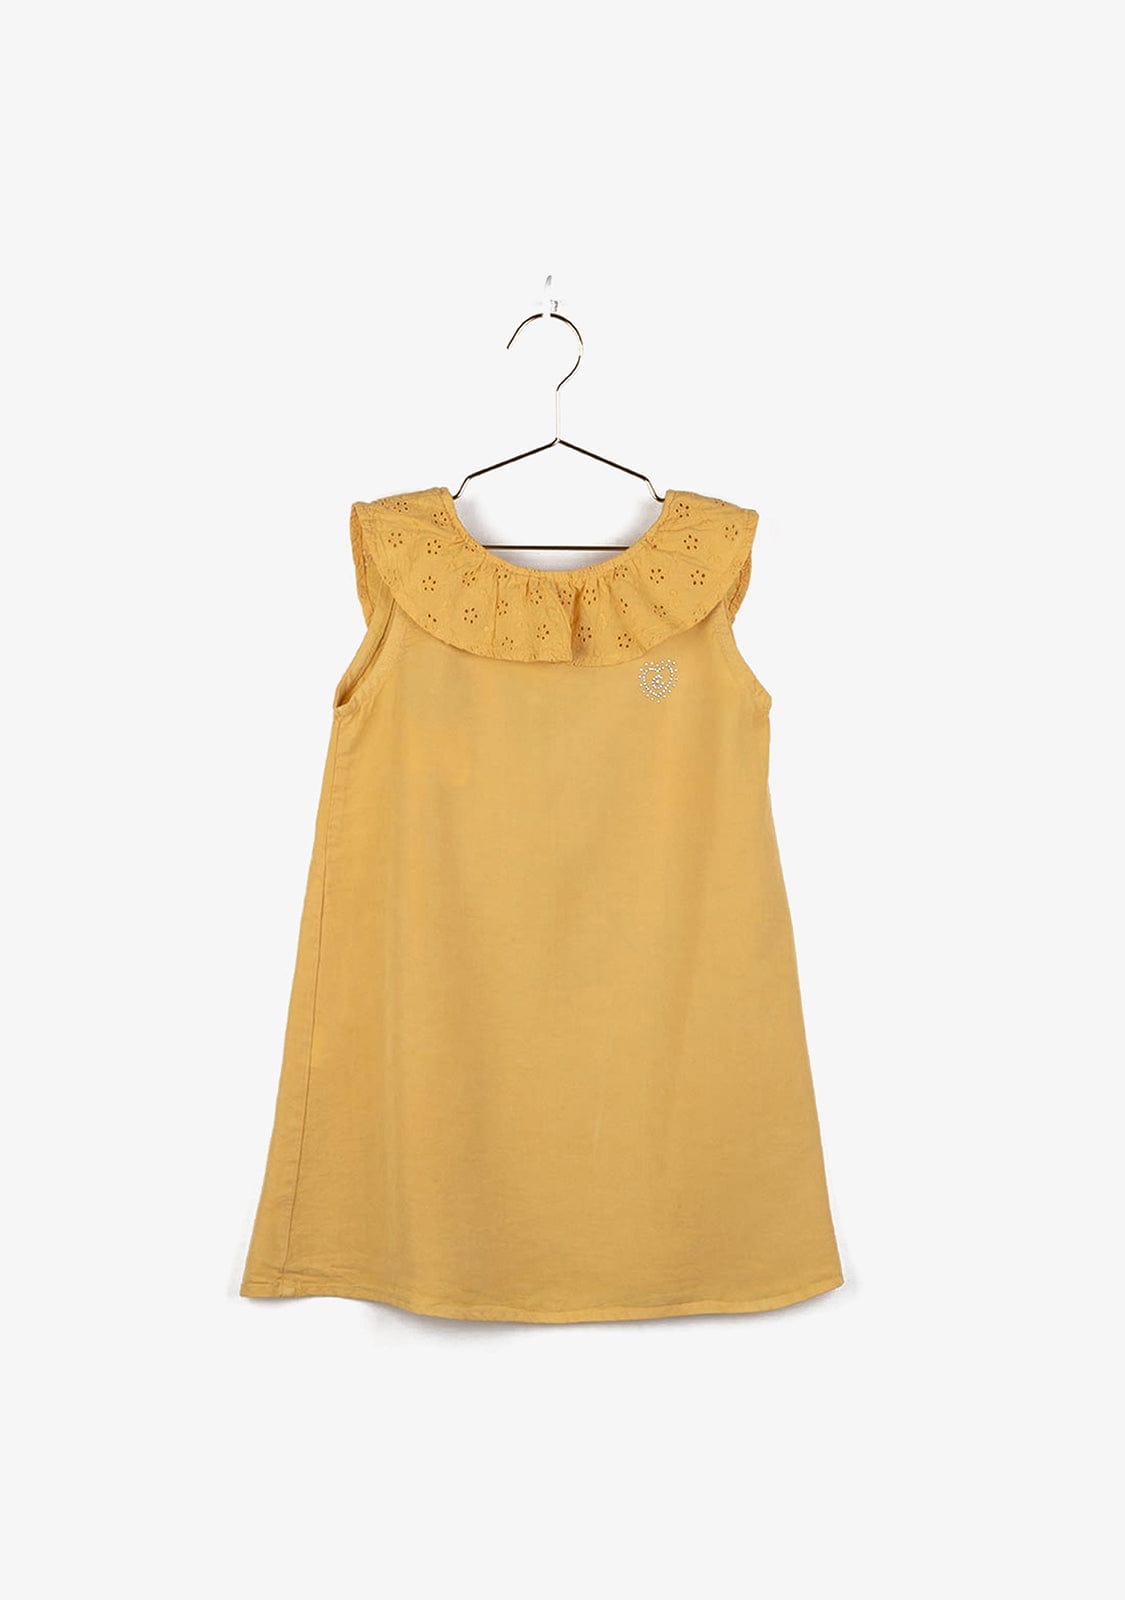 CONGUITOS TEXTIL Clothing Girl's Mustard Tencel Dress